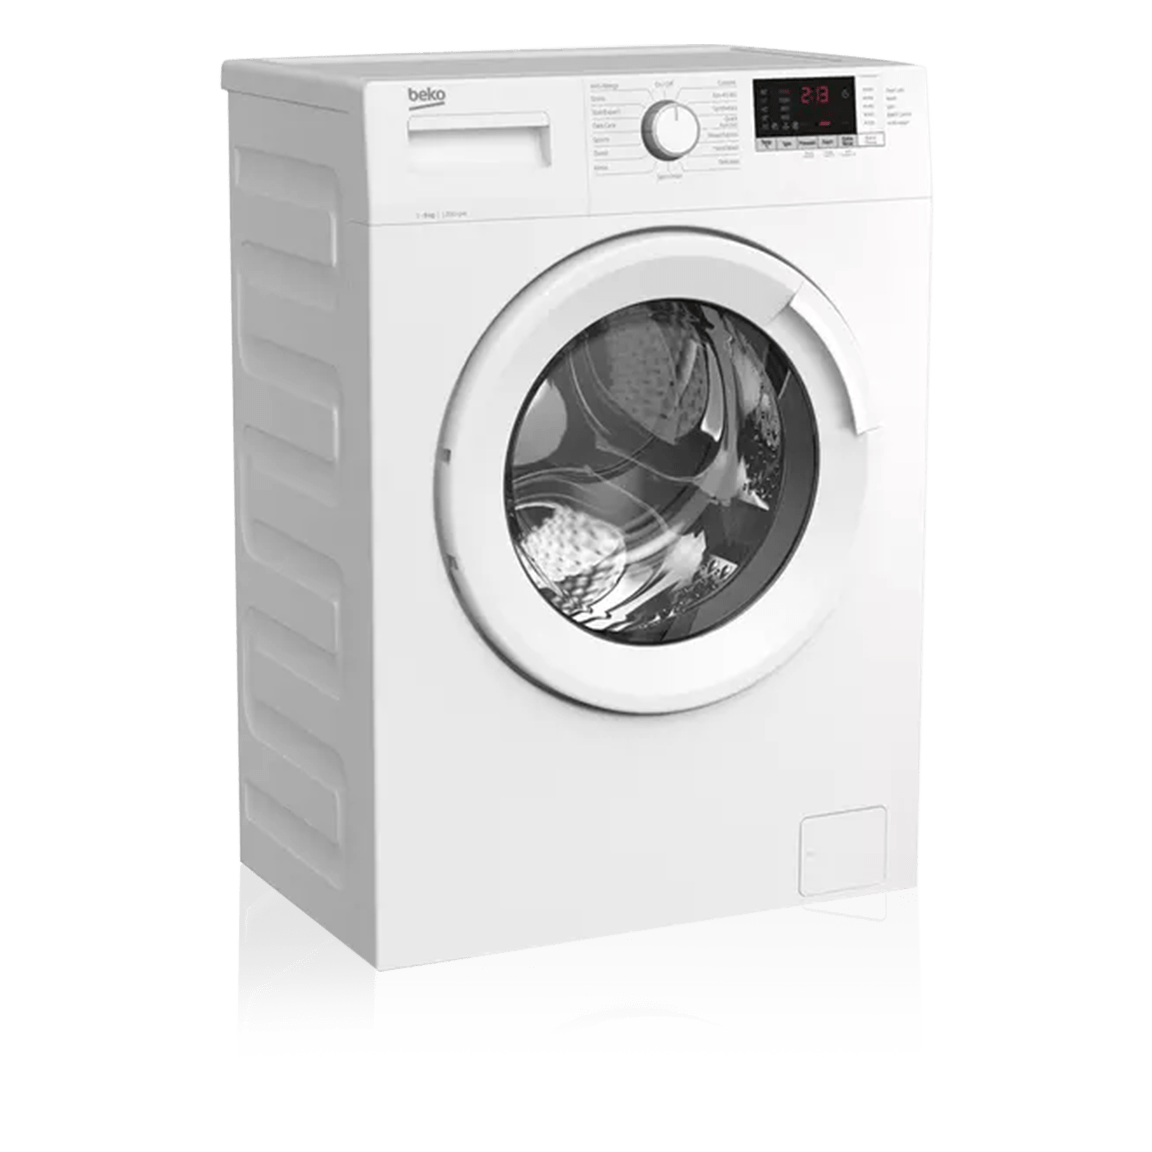 White Beko washing machine with a silver cylinder